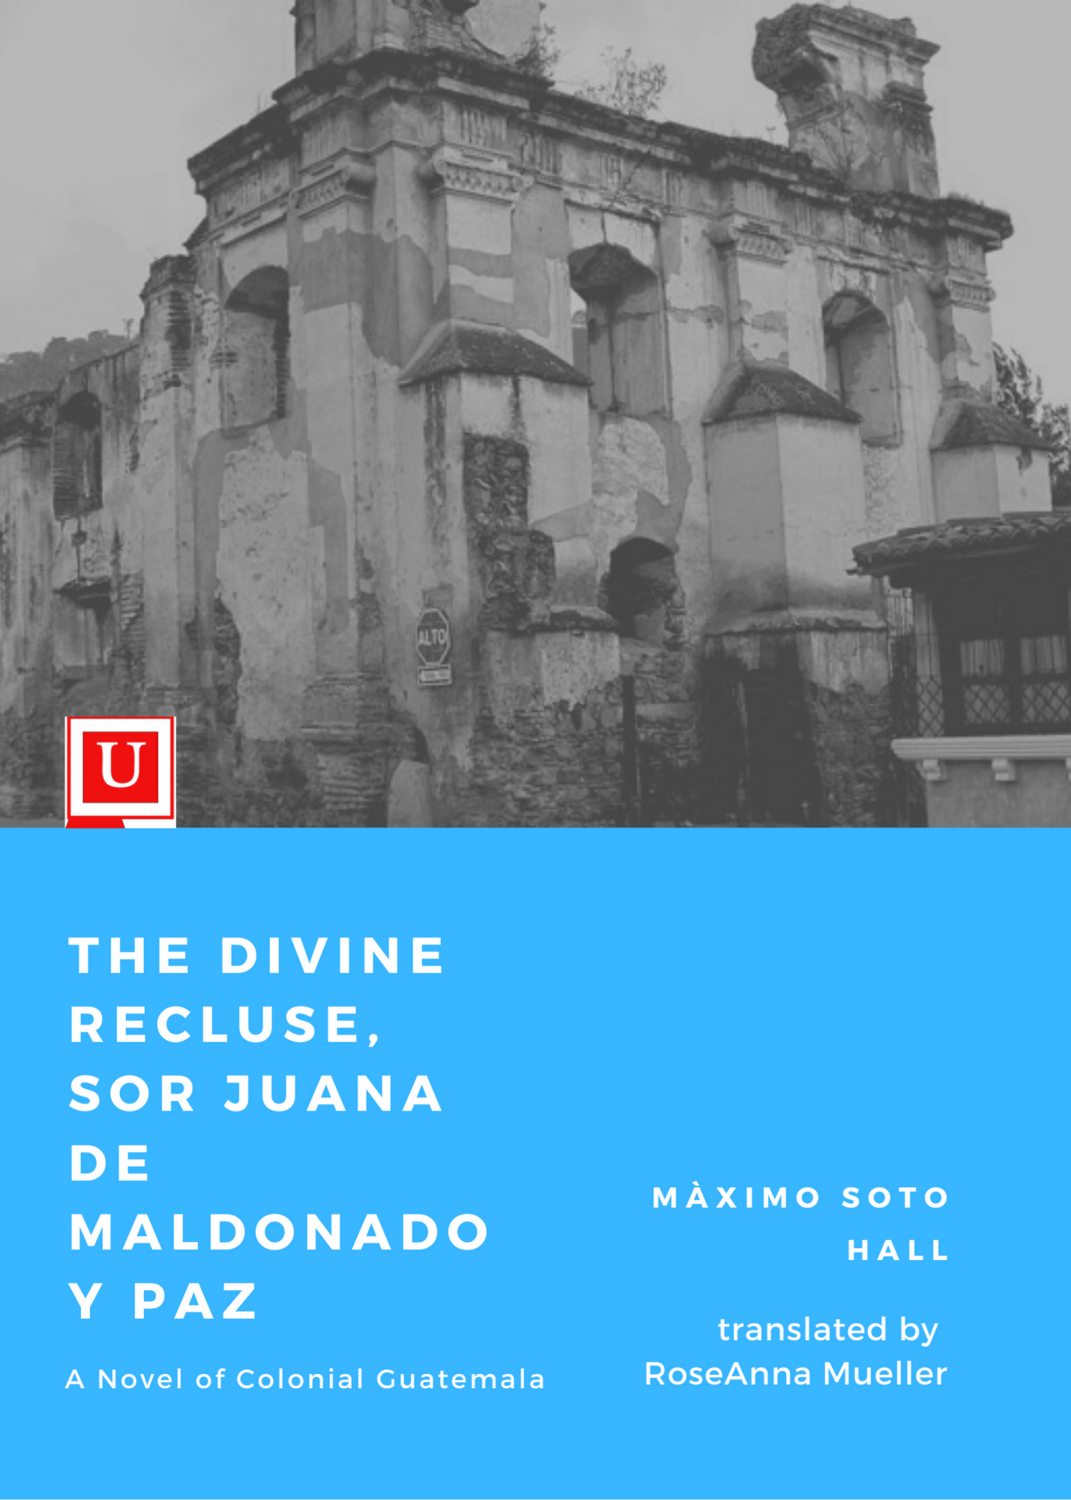 The Divine Recluse, Sor Juana de Maldonado y Paz